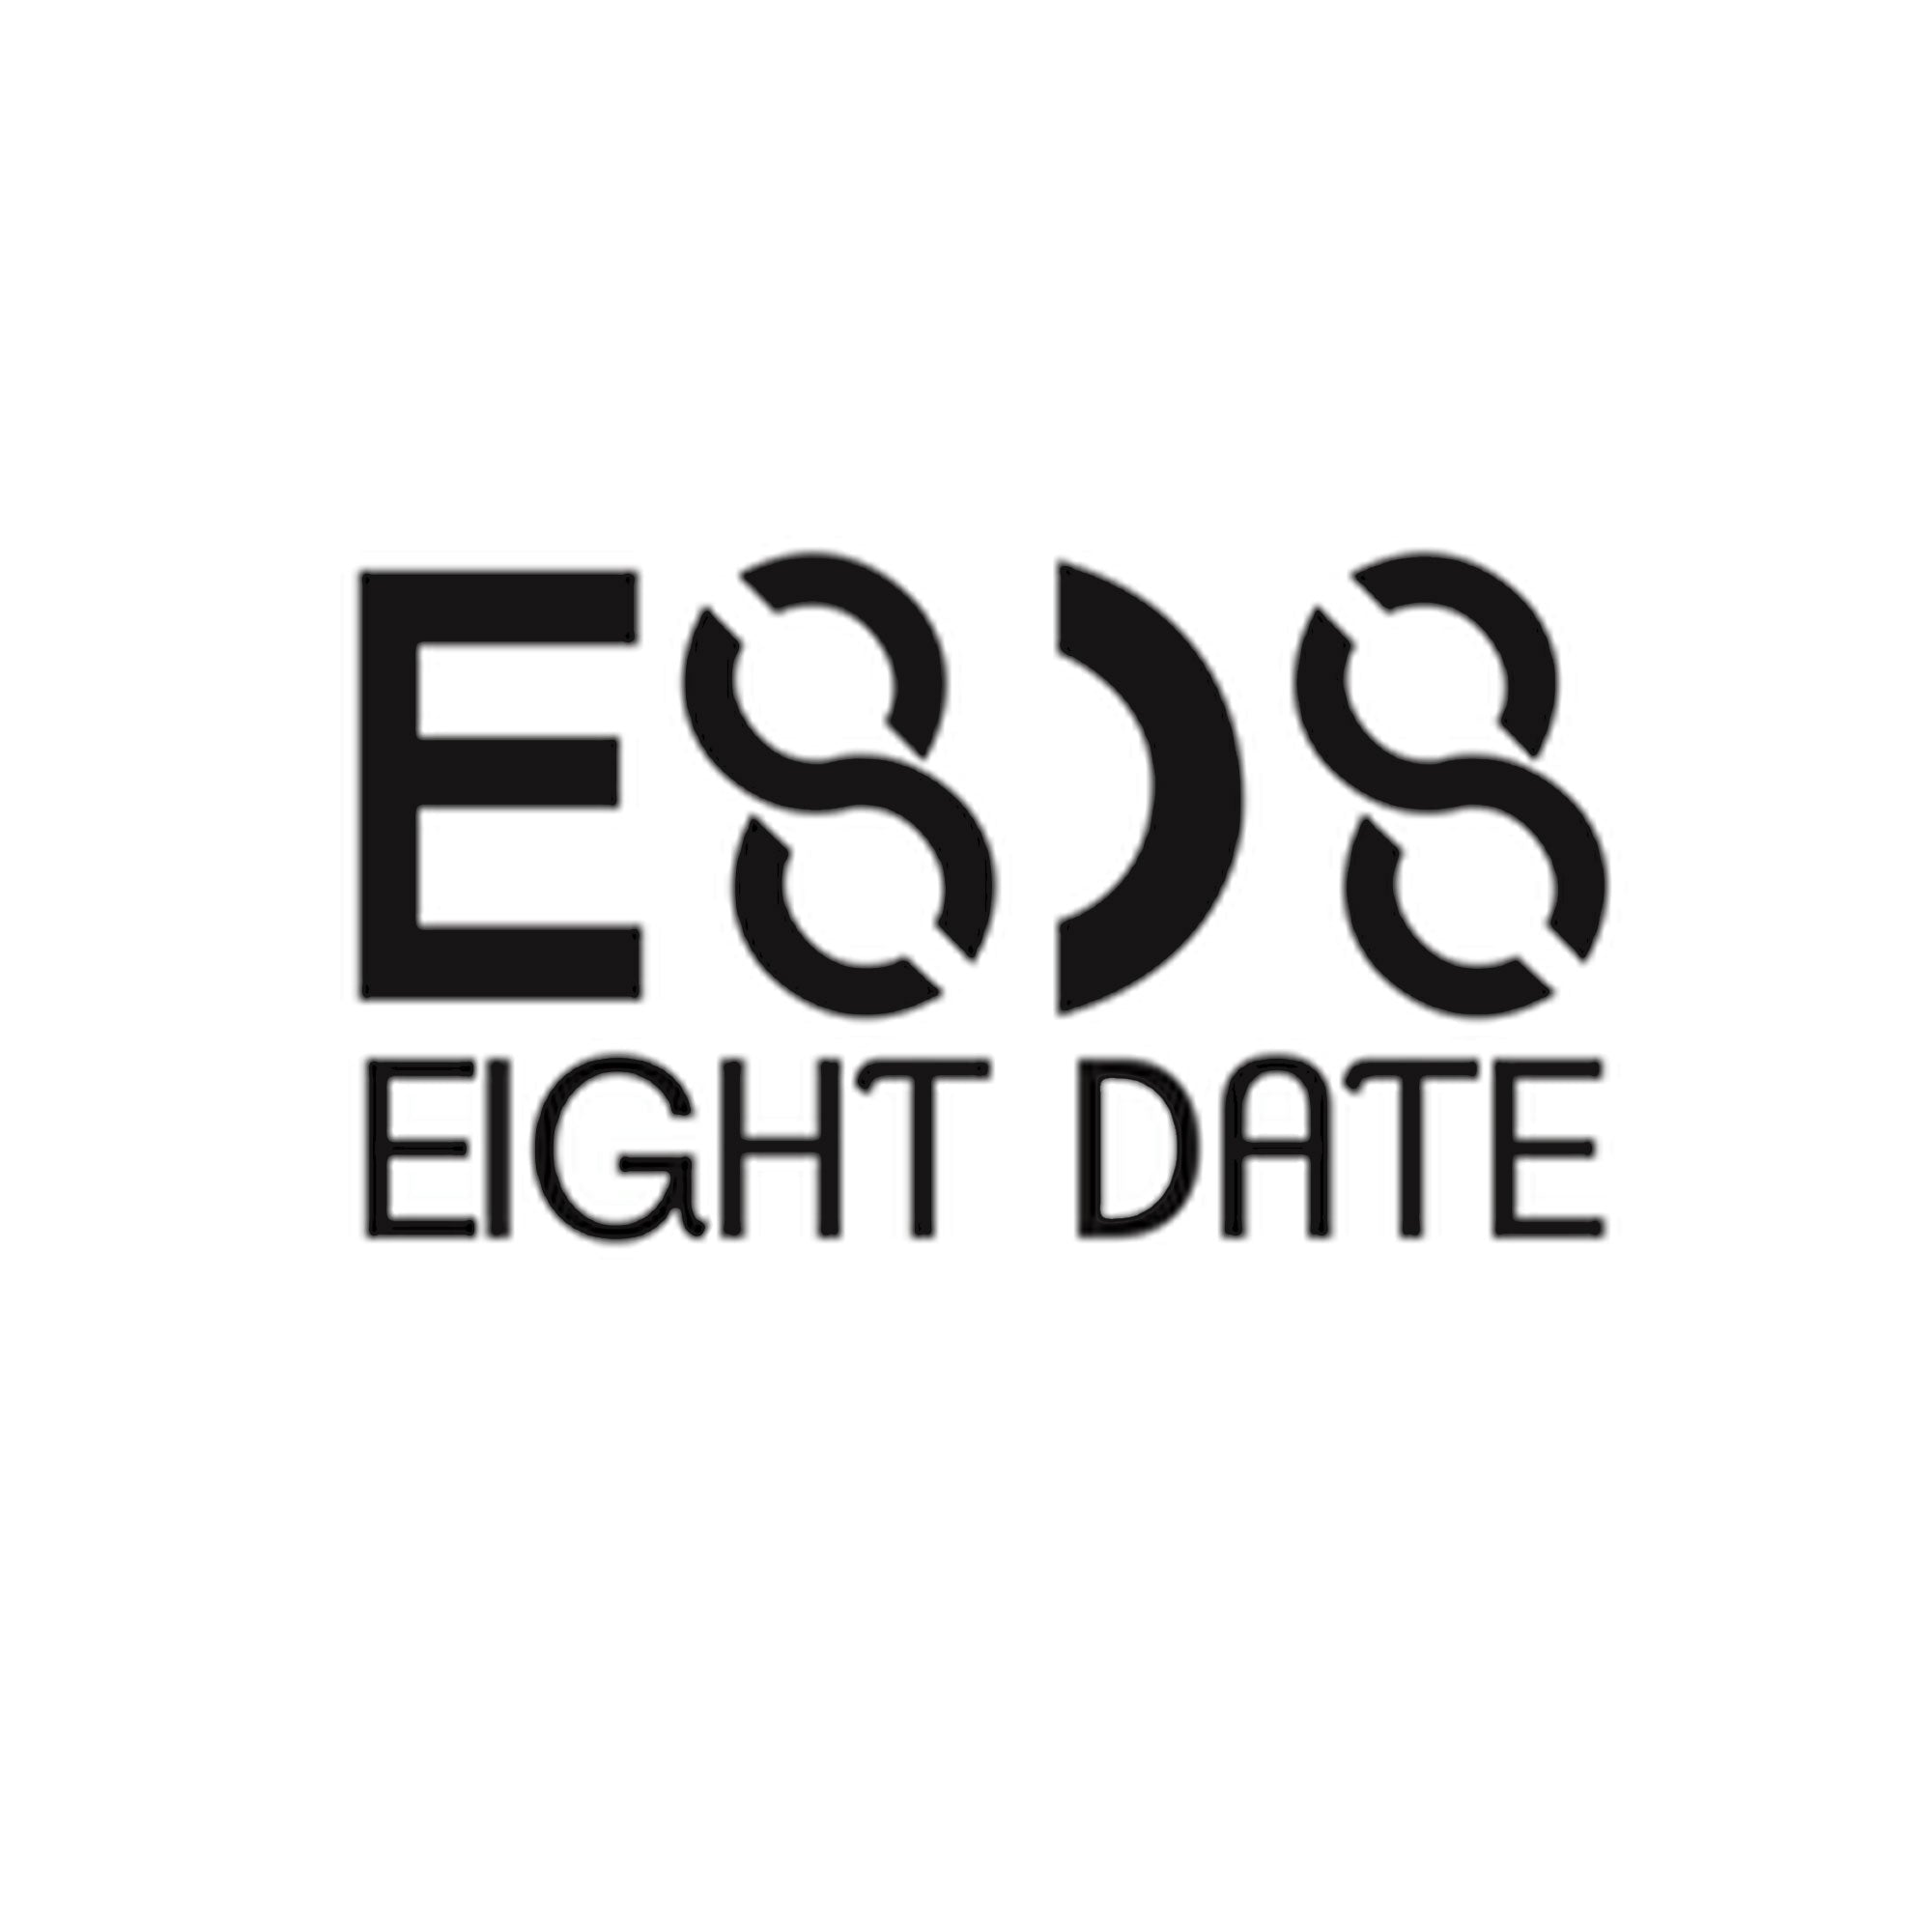 Eight Date logo